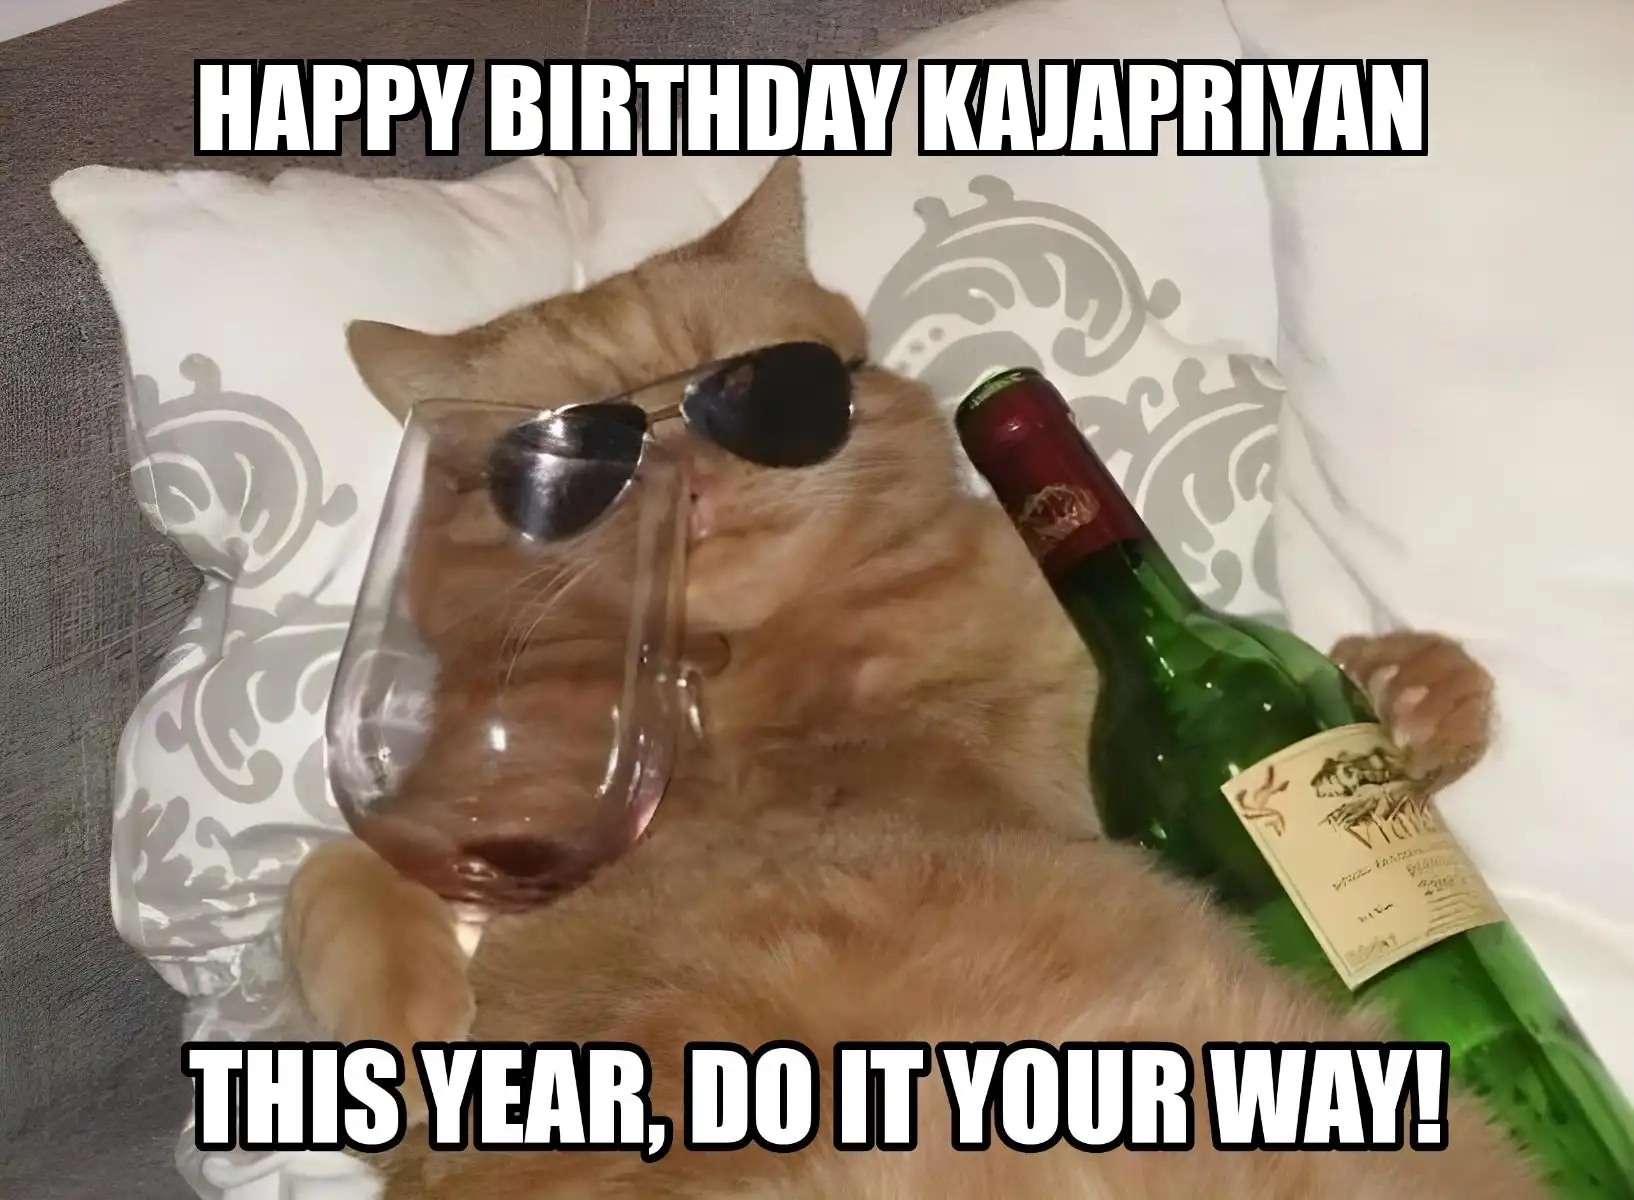 Happy Birthday Kajapriyan This Year Do It Your Way Meme